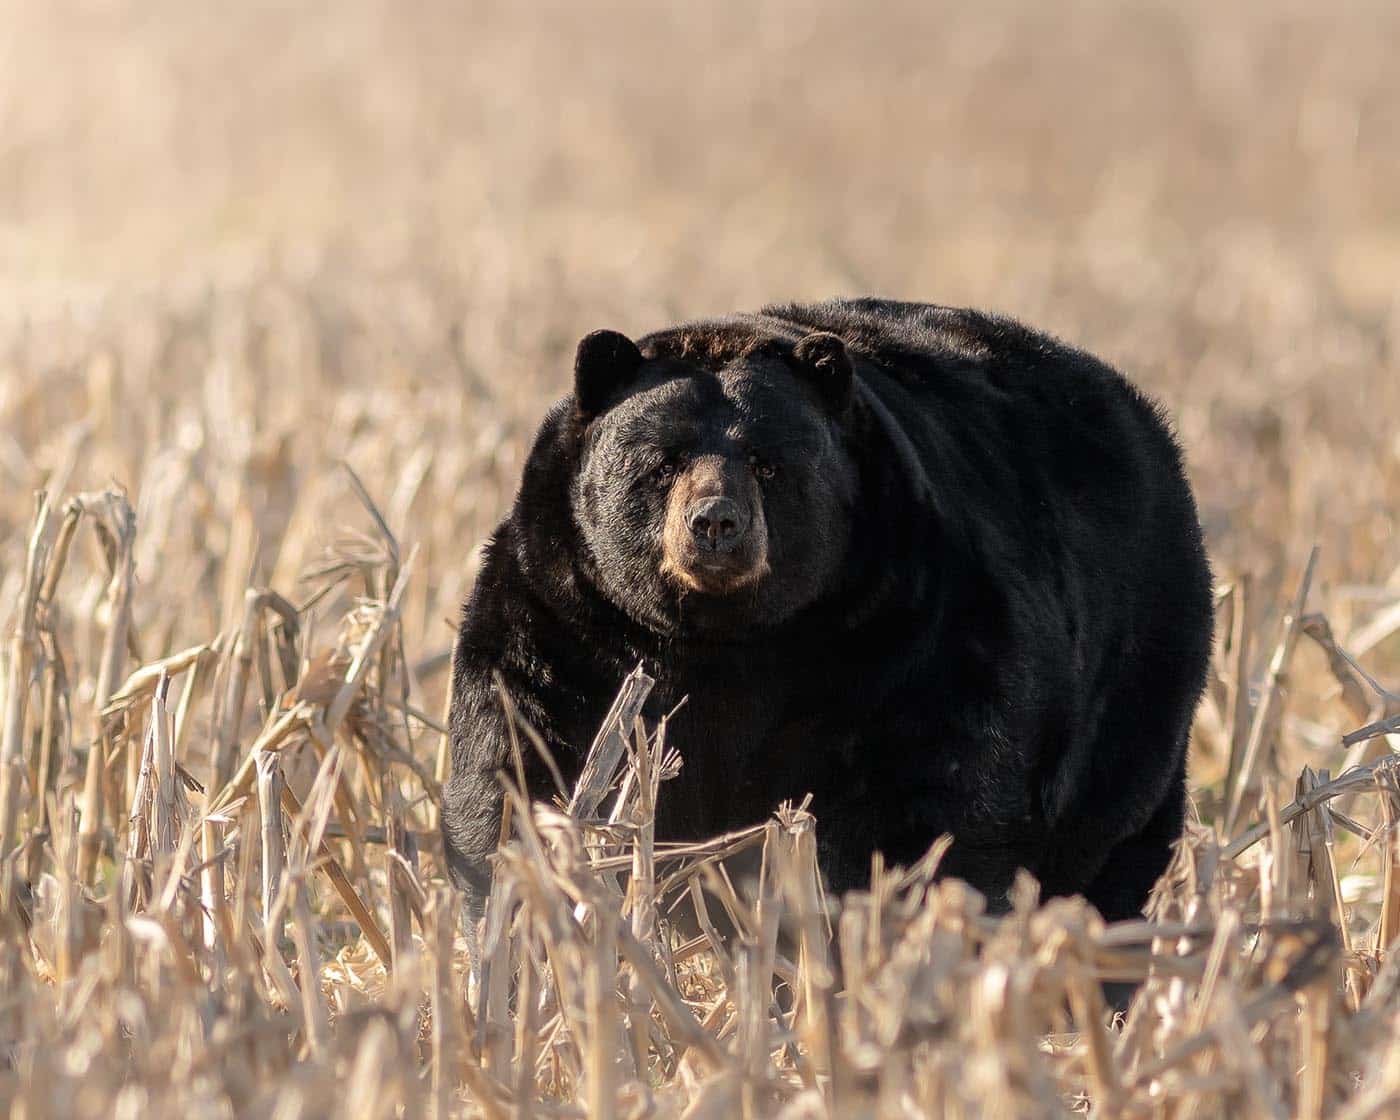 Massive black bear in the crops